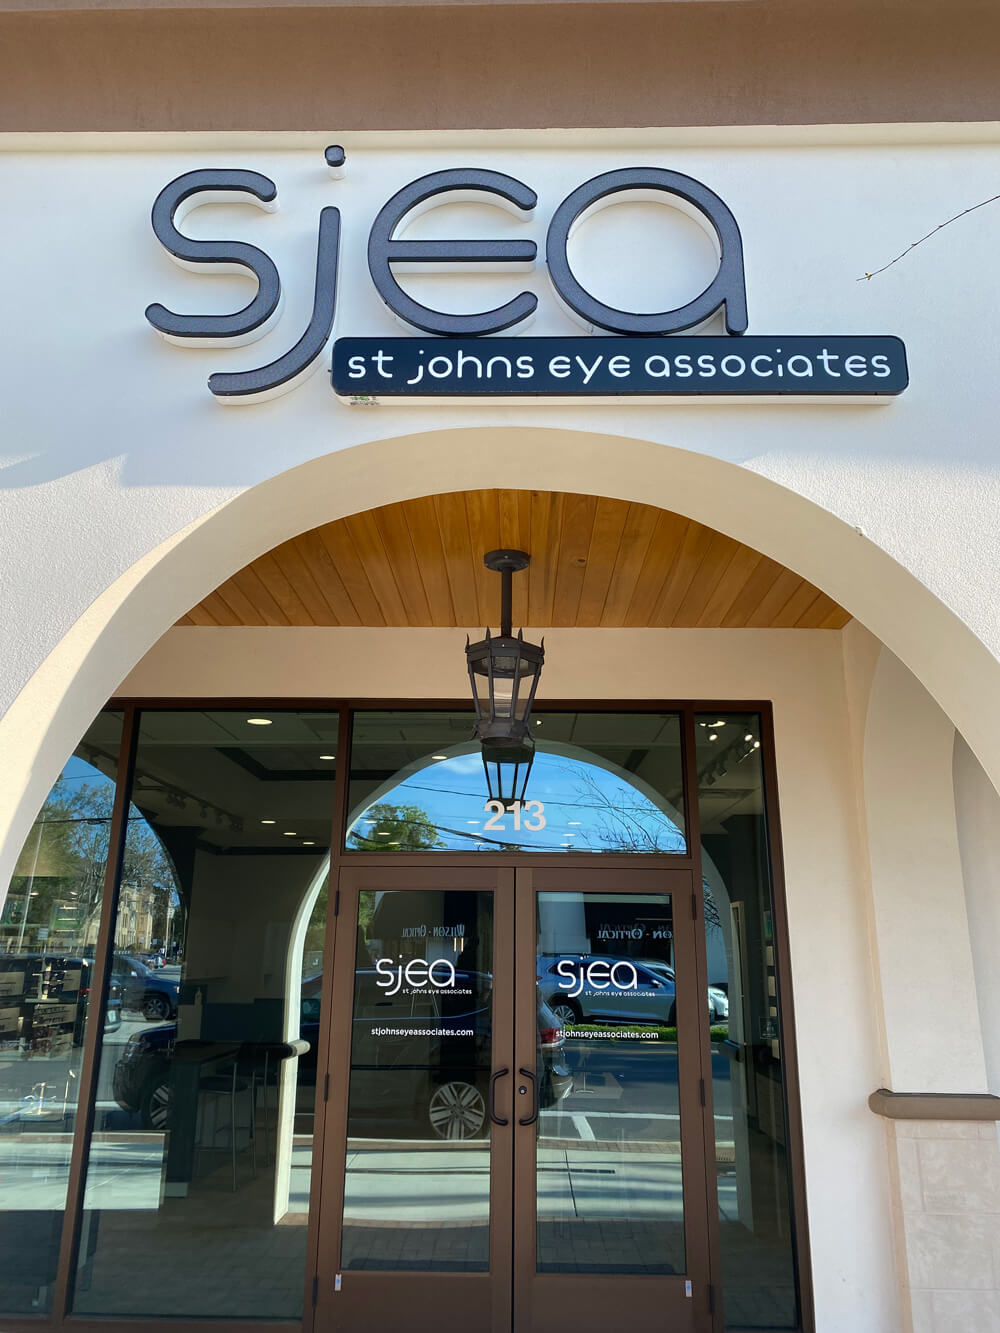 St. John's Eye Associates' front entrance sign.